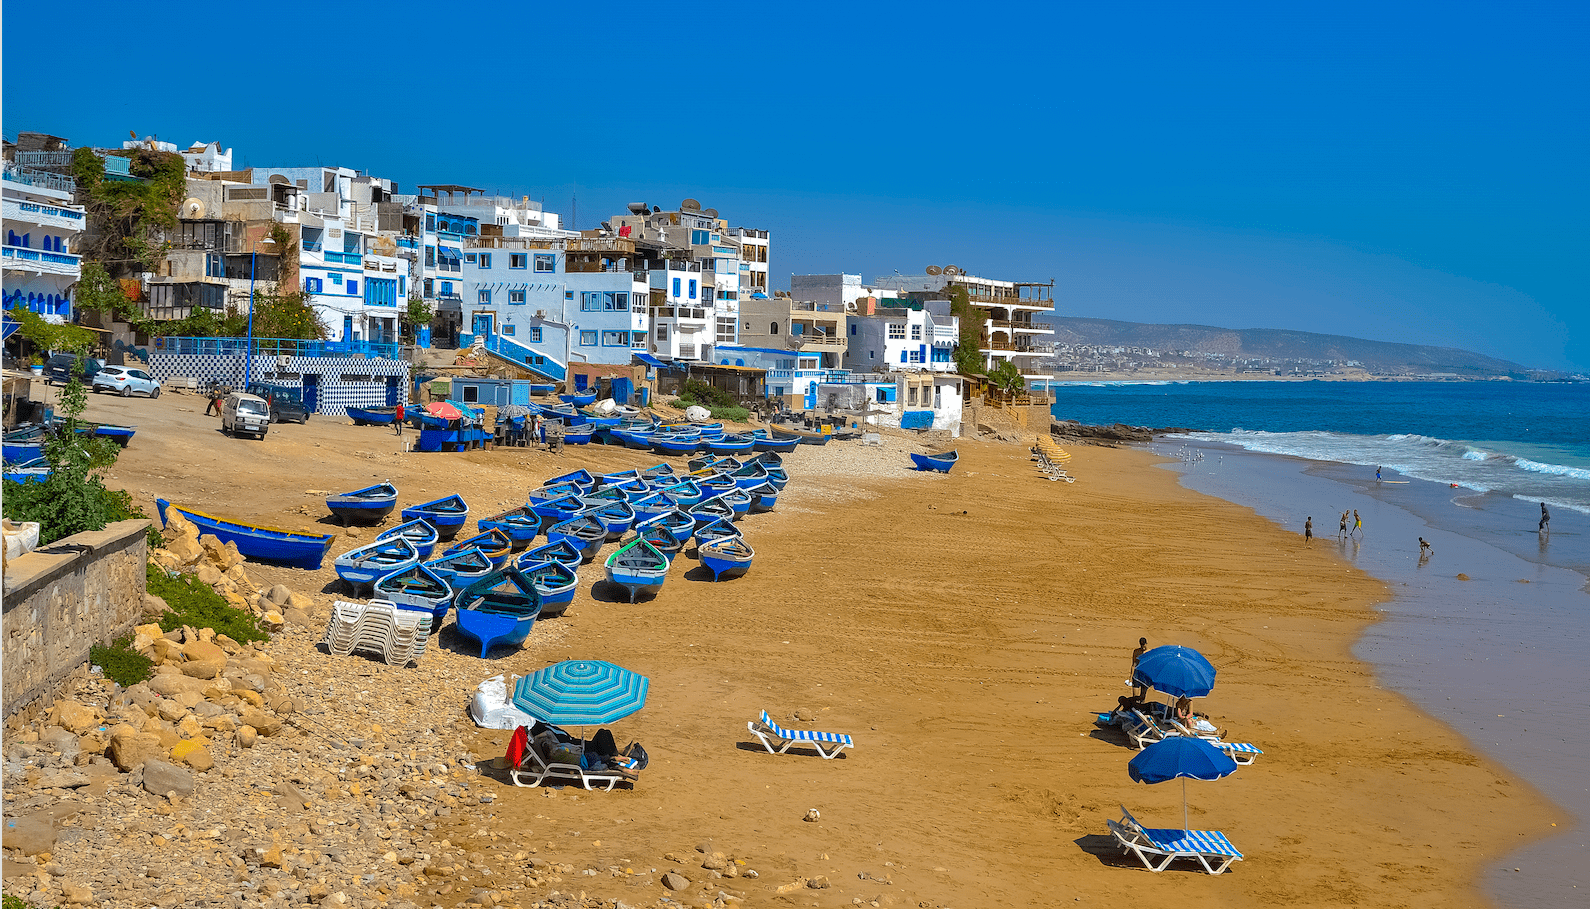 Radisson Blu Resort Taghazout Bay Surf Village inaugure sa plage privée “ La Brise ” - Agadir Aujourd'hui